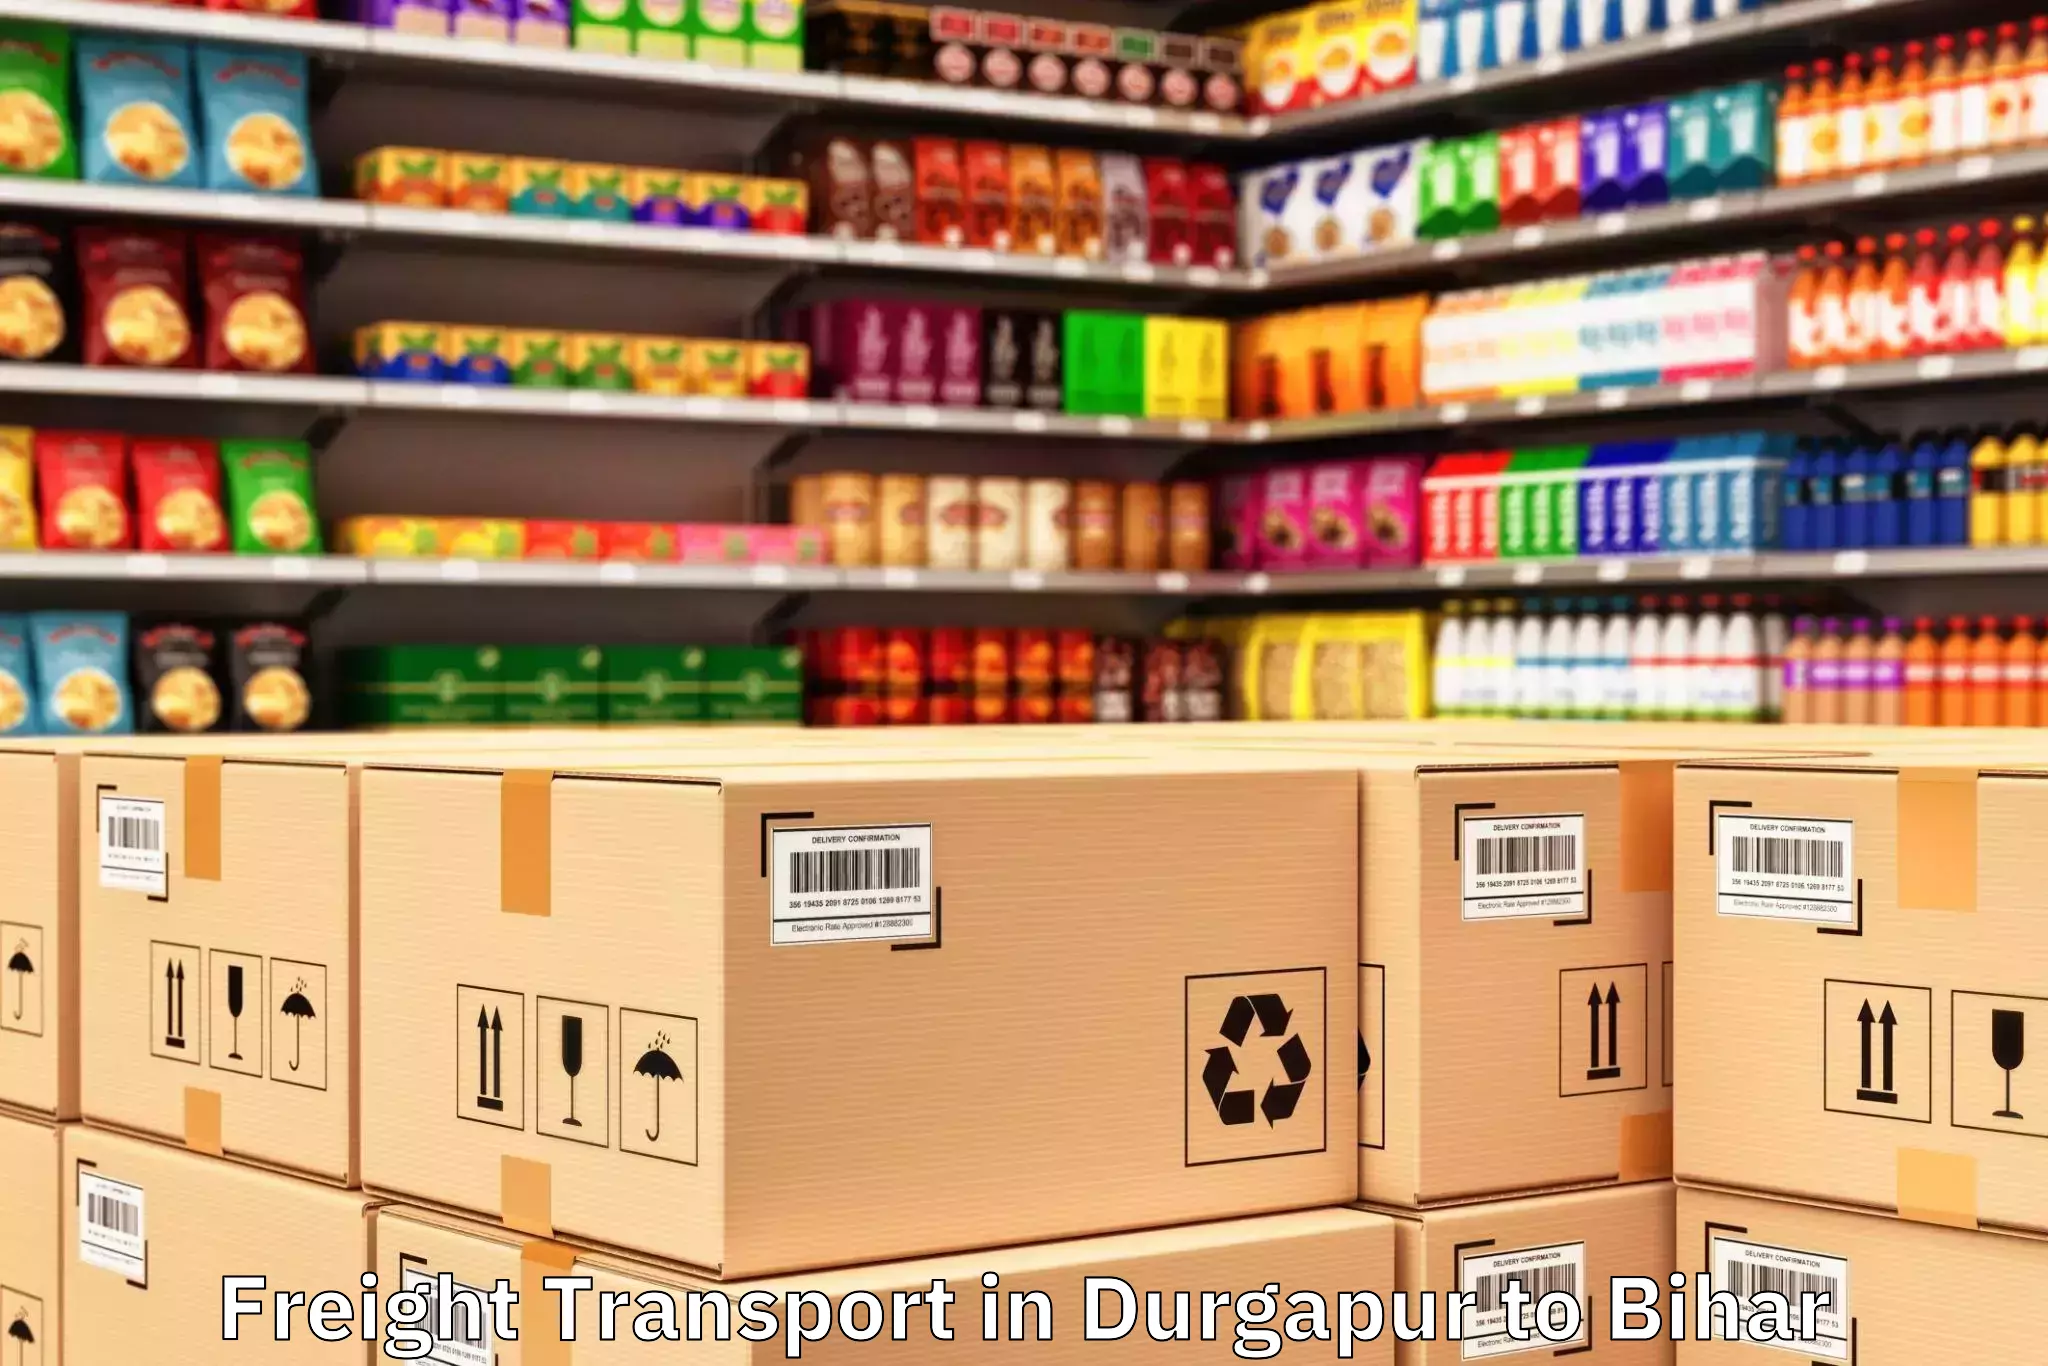 Quality Durgapur to Madhepur Freight Transport